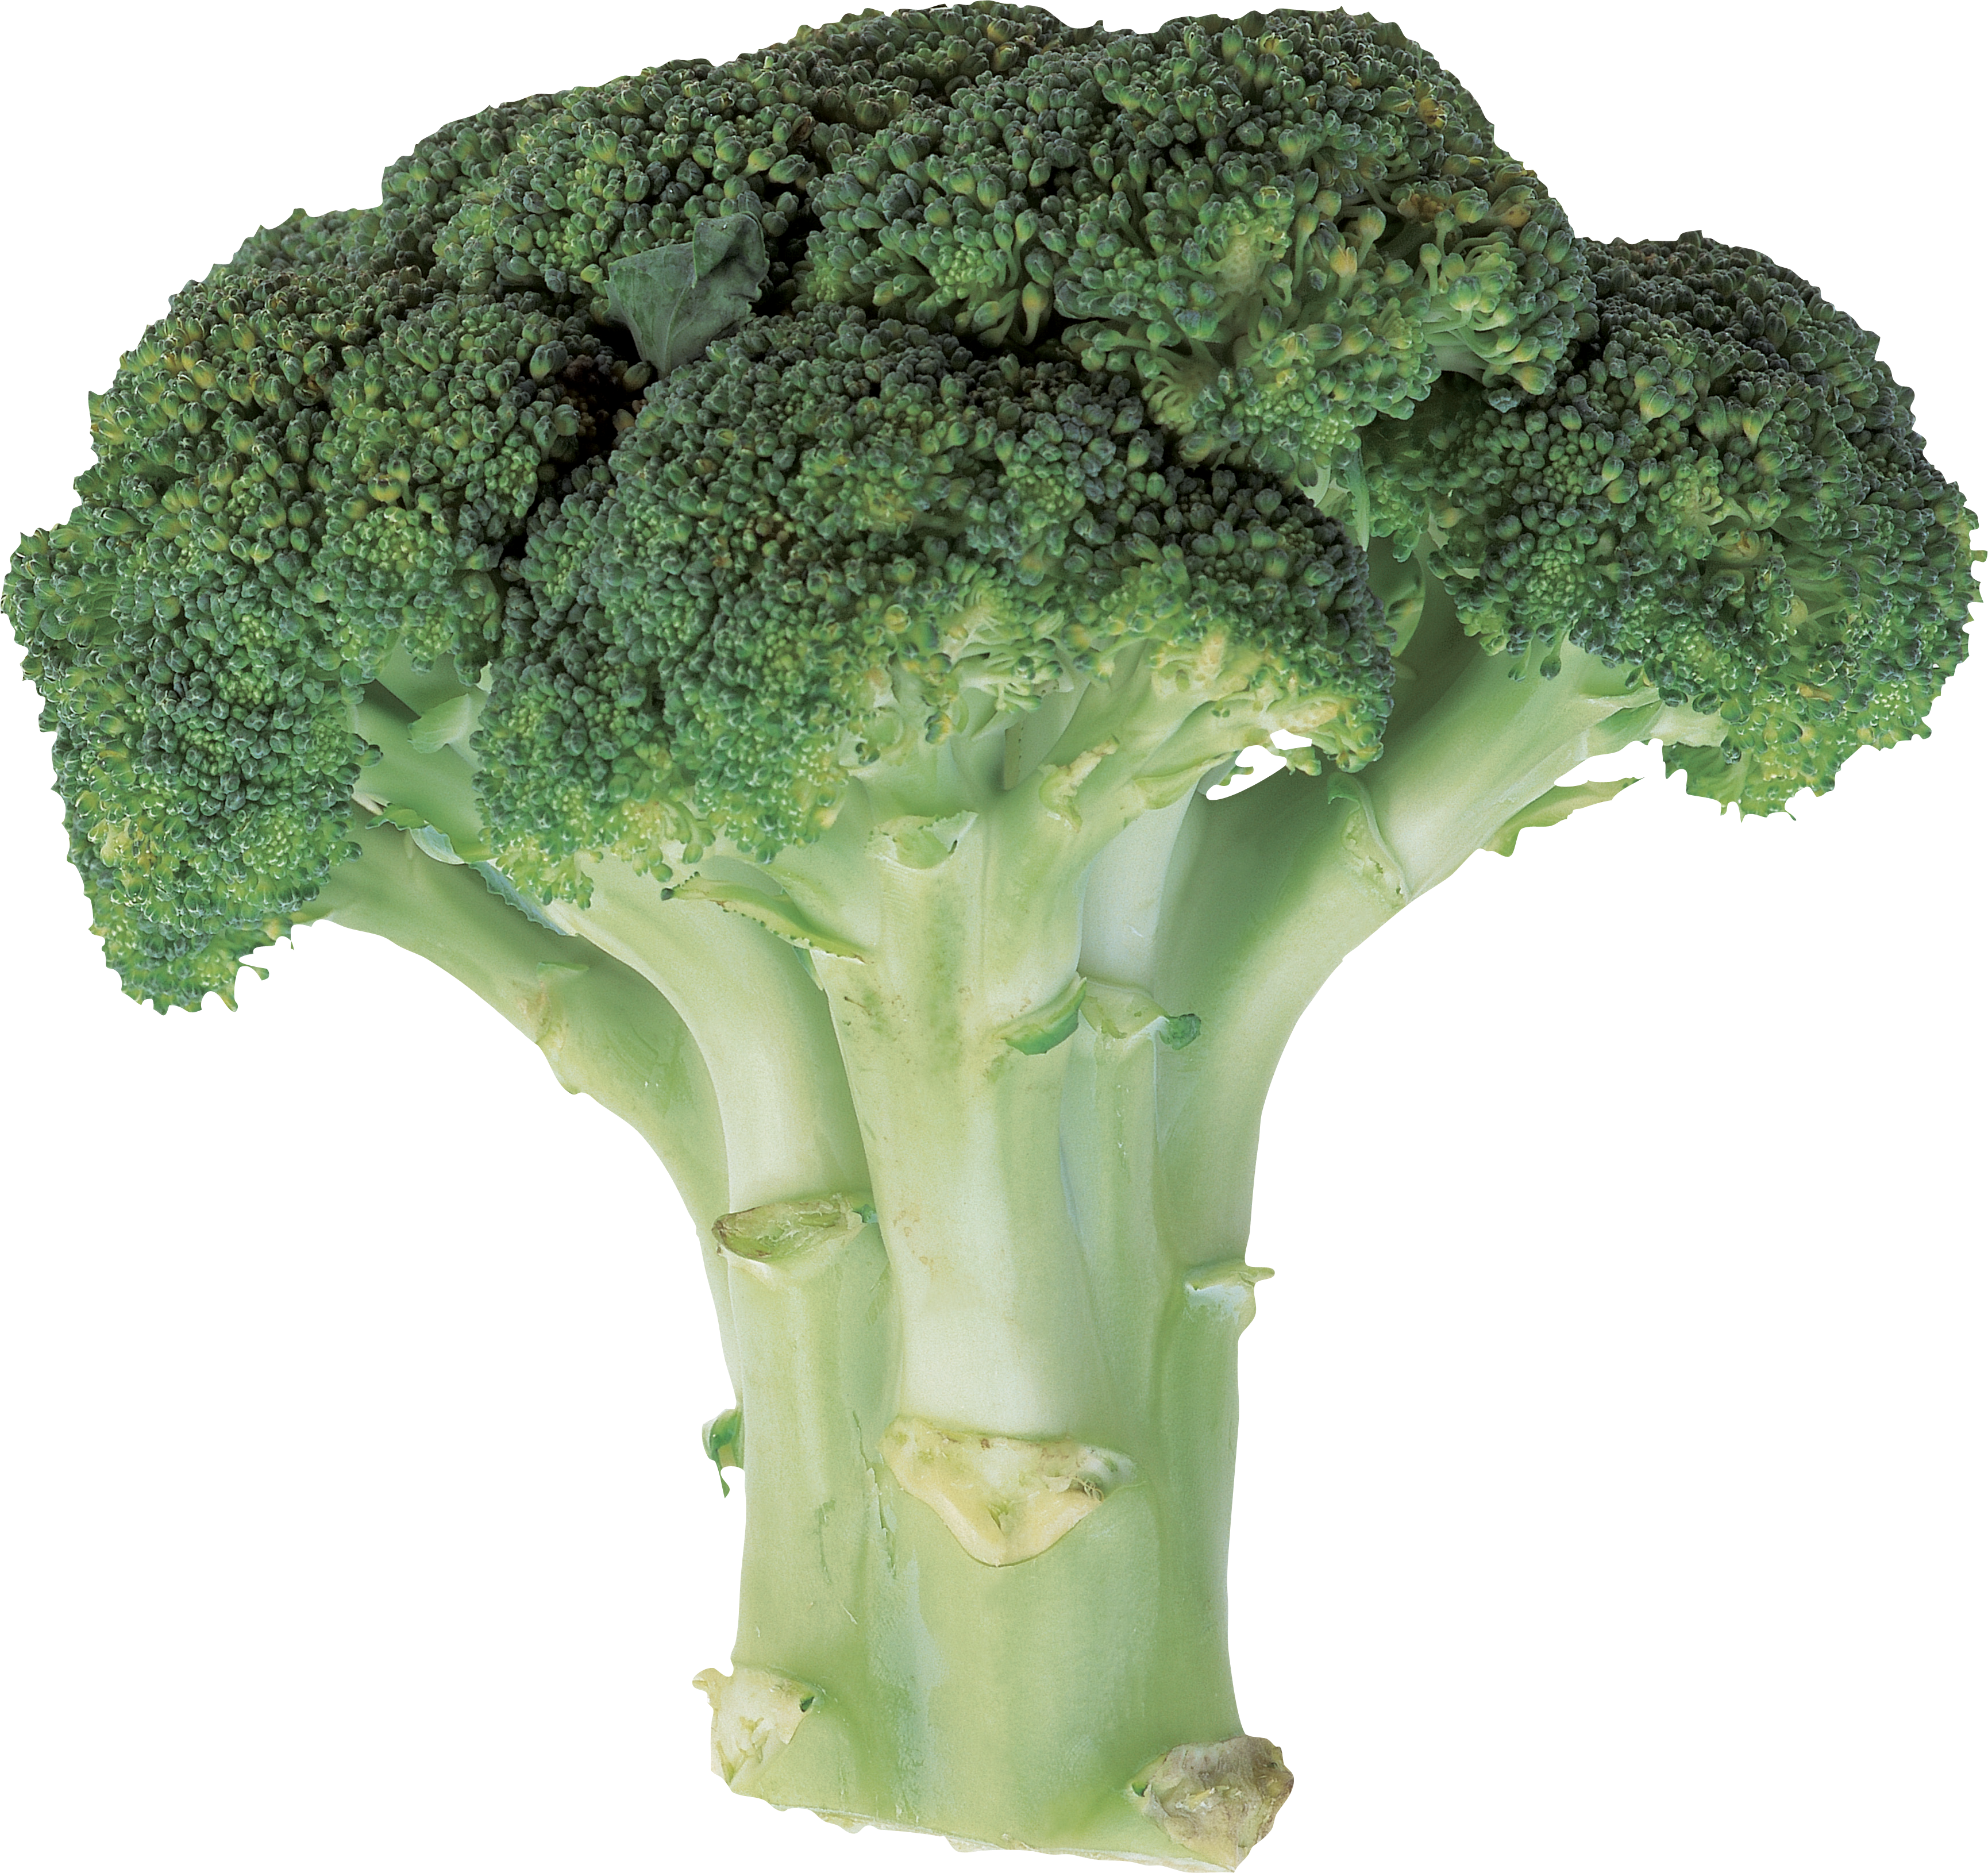 Broccoli PNG